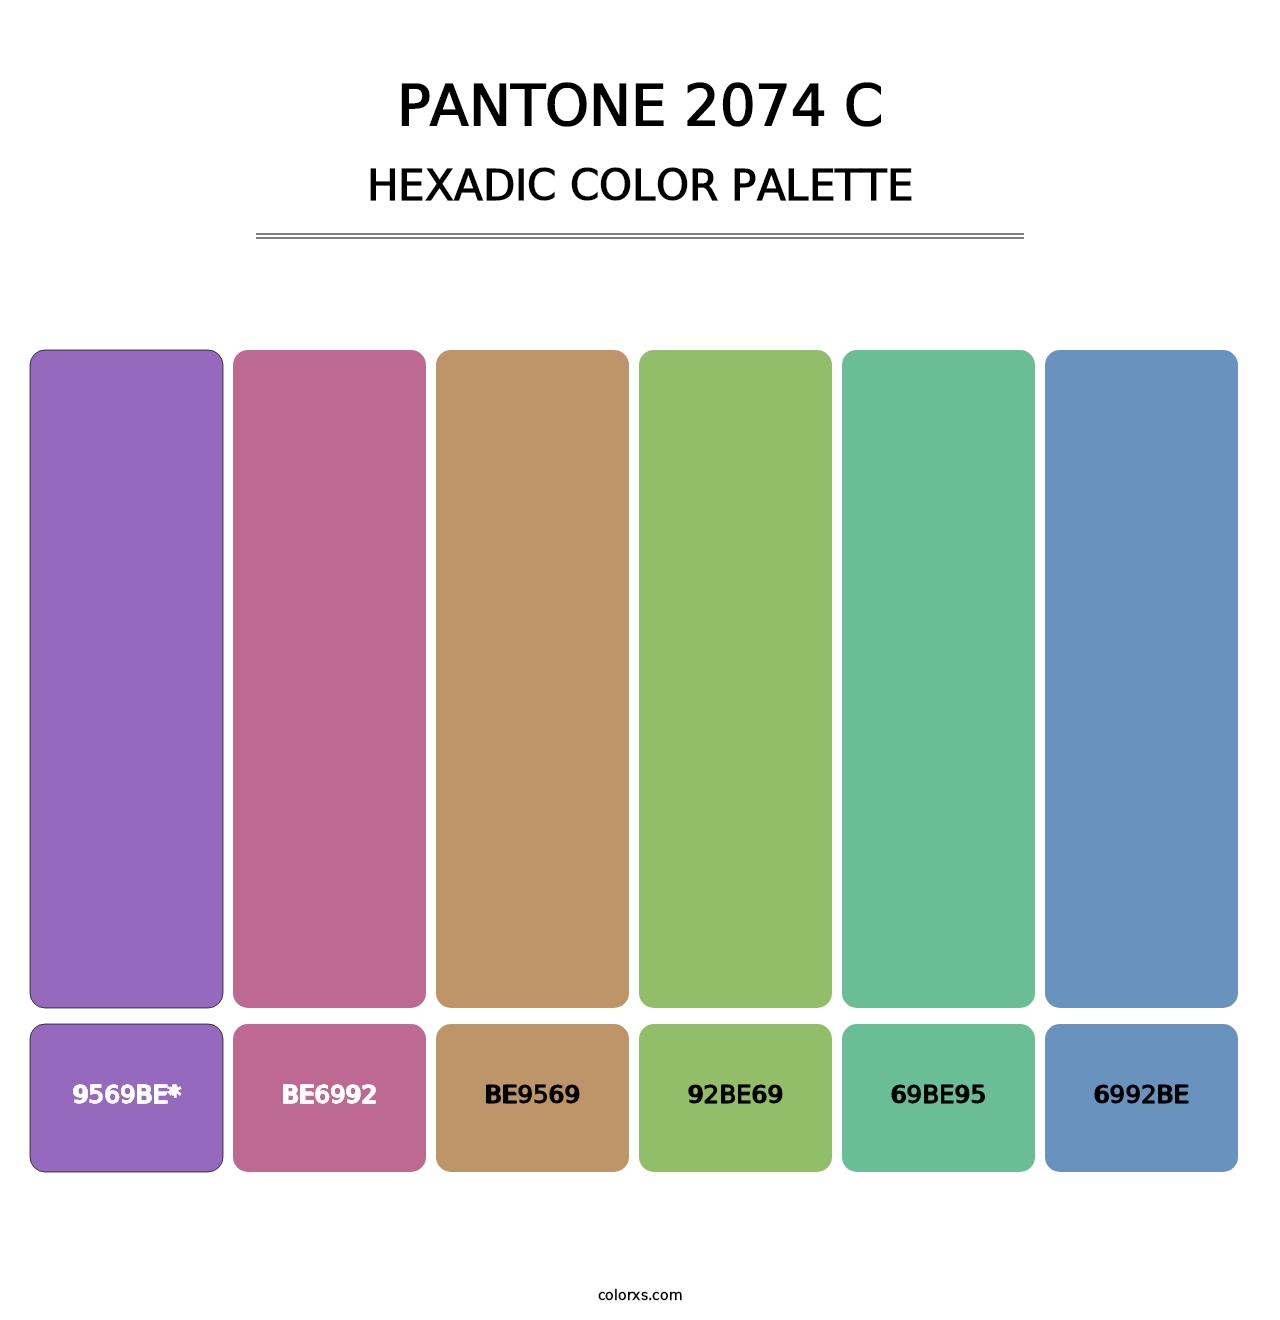 PANTONE 2074 C - Hexadic Color Palette